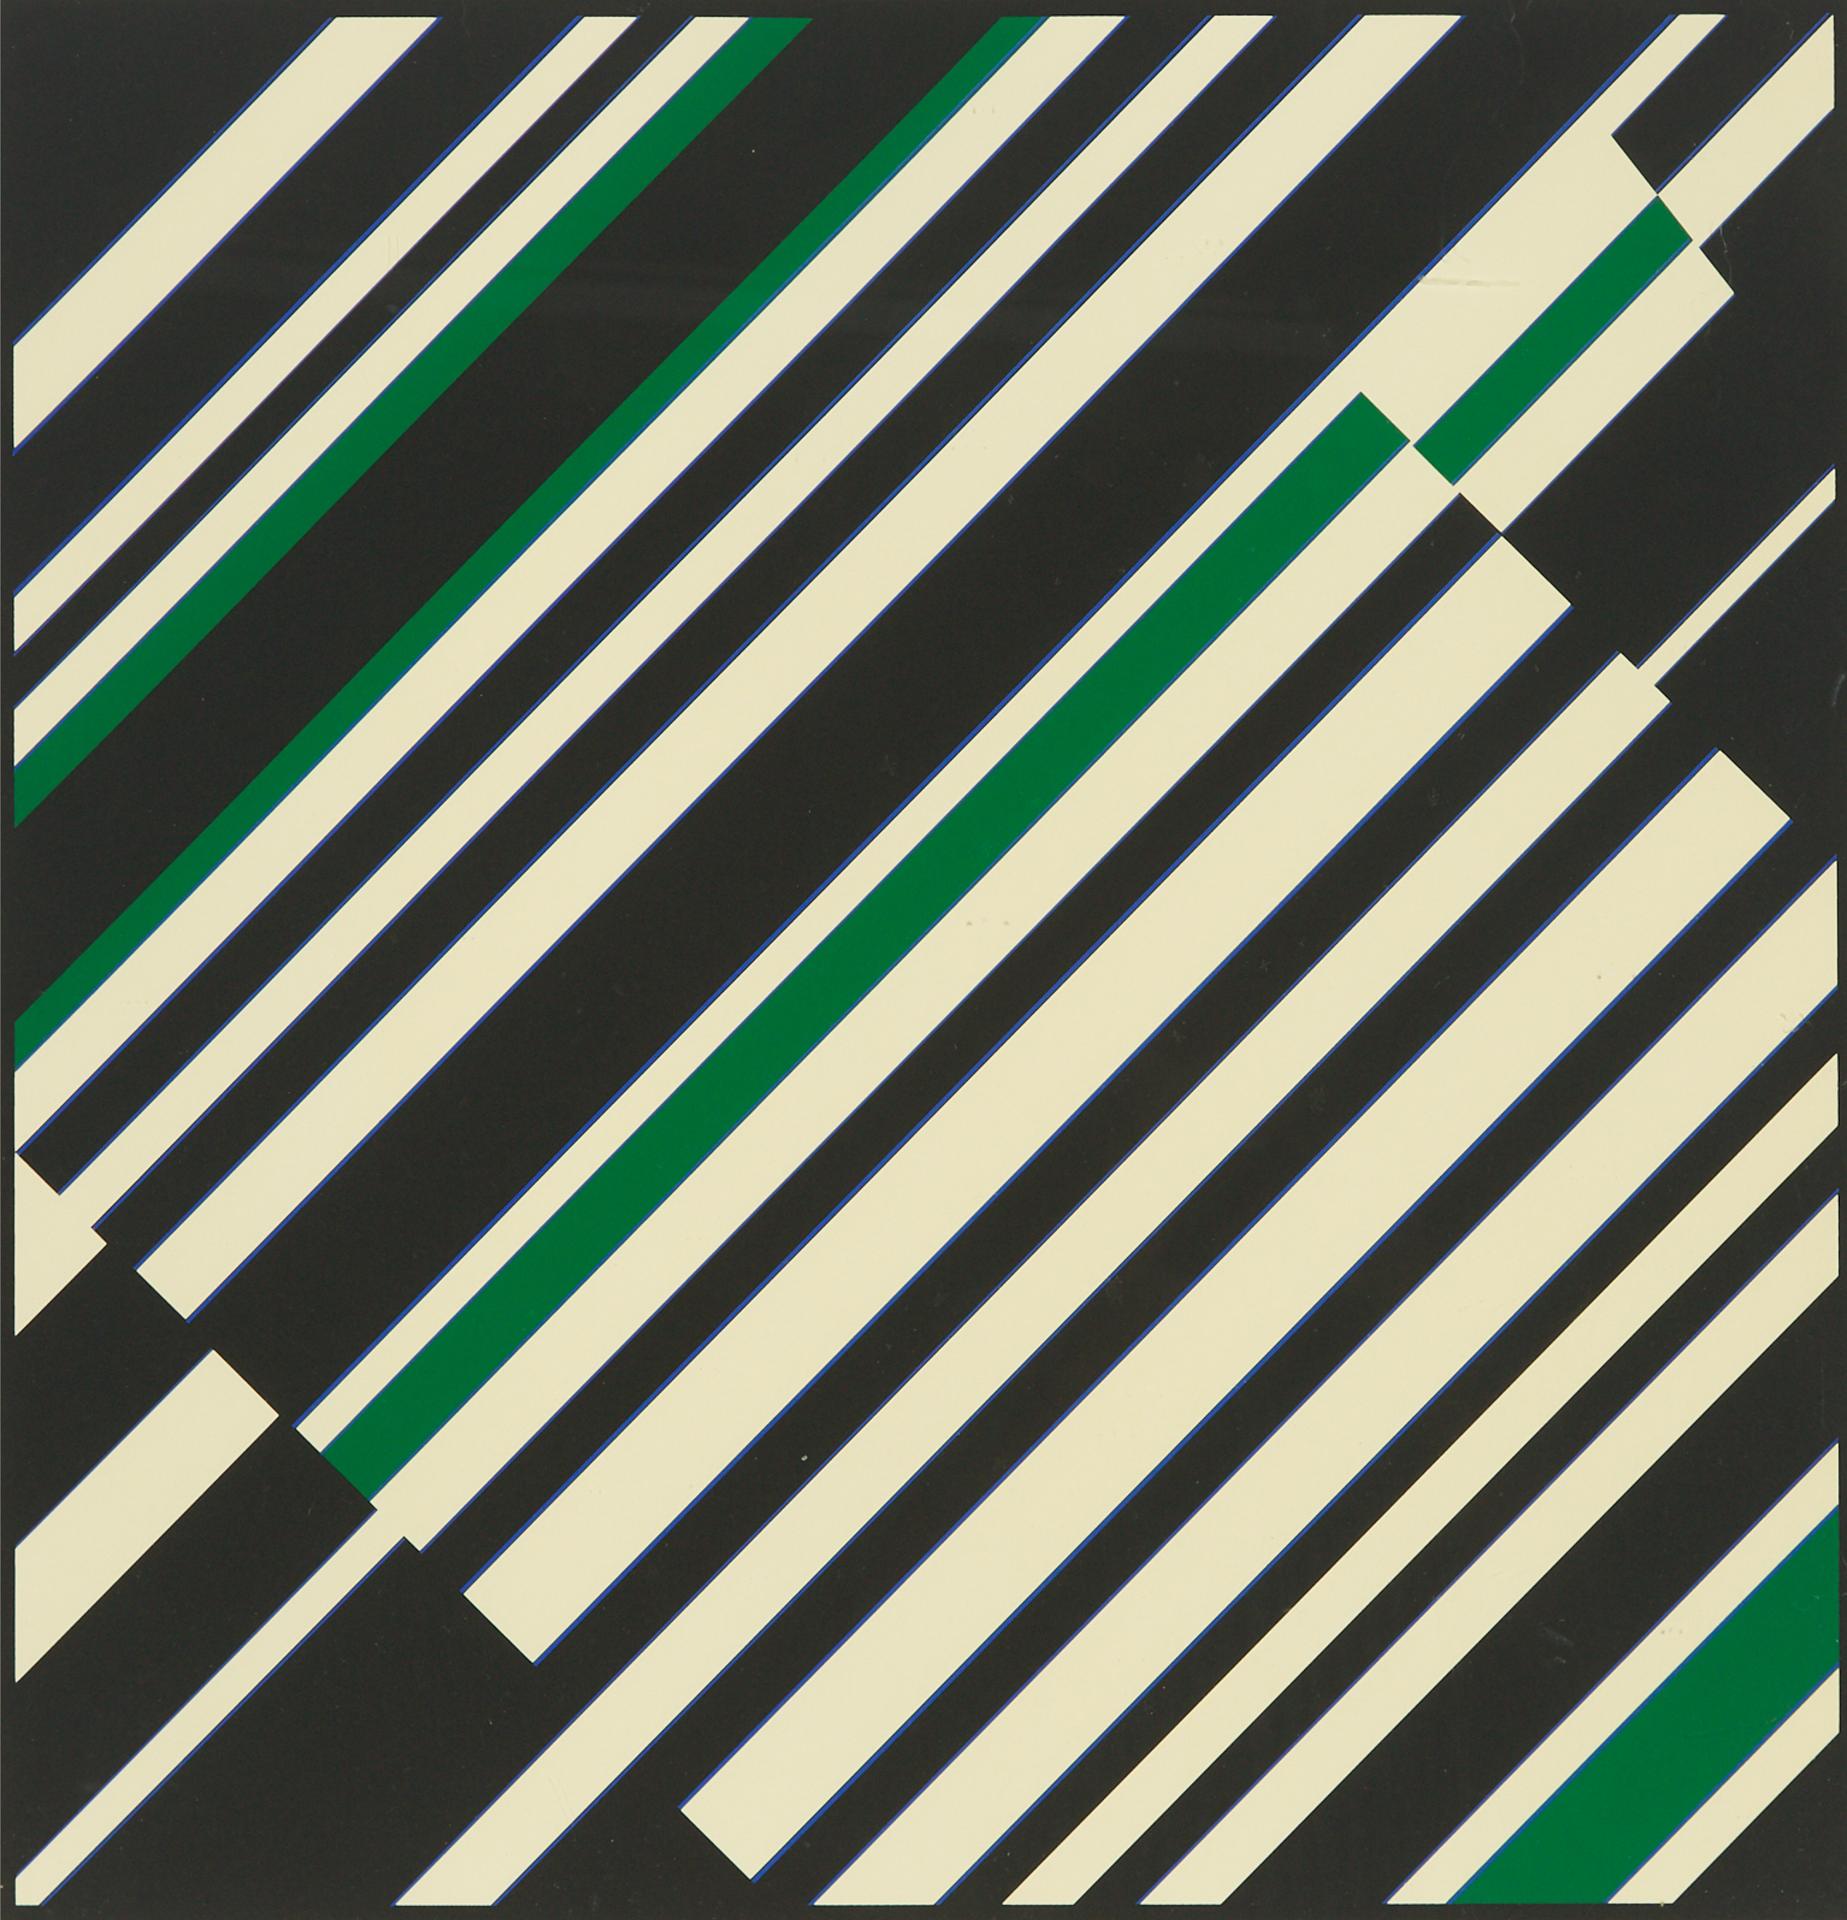 Günter Fruhtrunk - Untitled (Black, White, Green Diagonal Composition), 1967